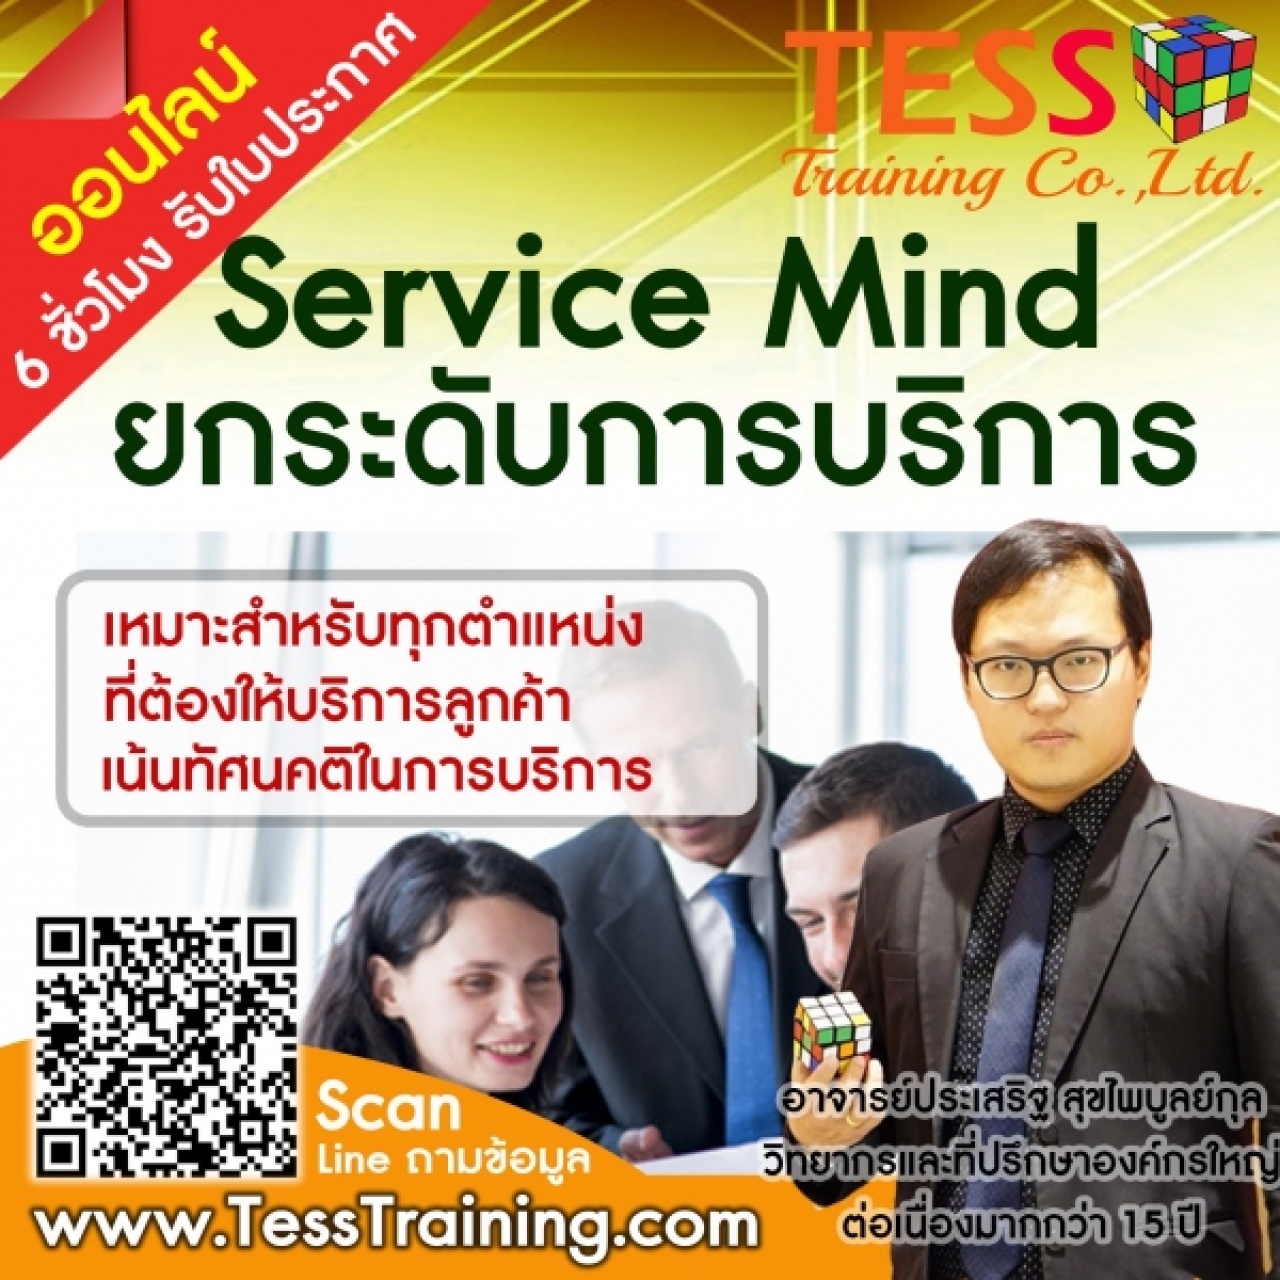 Public Training เปิดรับสมัคร ยืนยัน หลักสูตร Service mind ยกระดับการบริการให้เหนือชั้น 25 มีนาคม 2565 ประเสริฐ